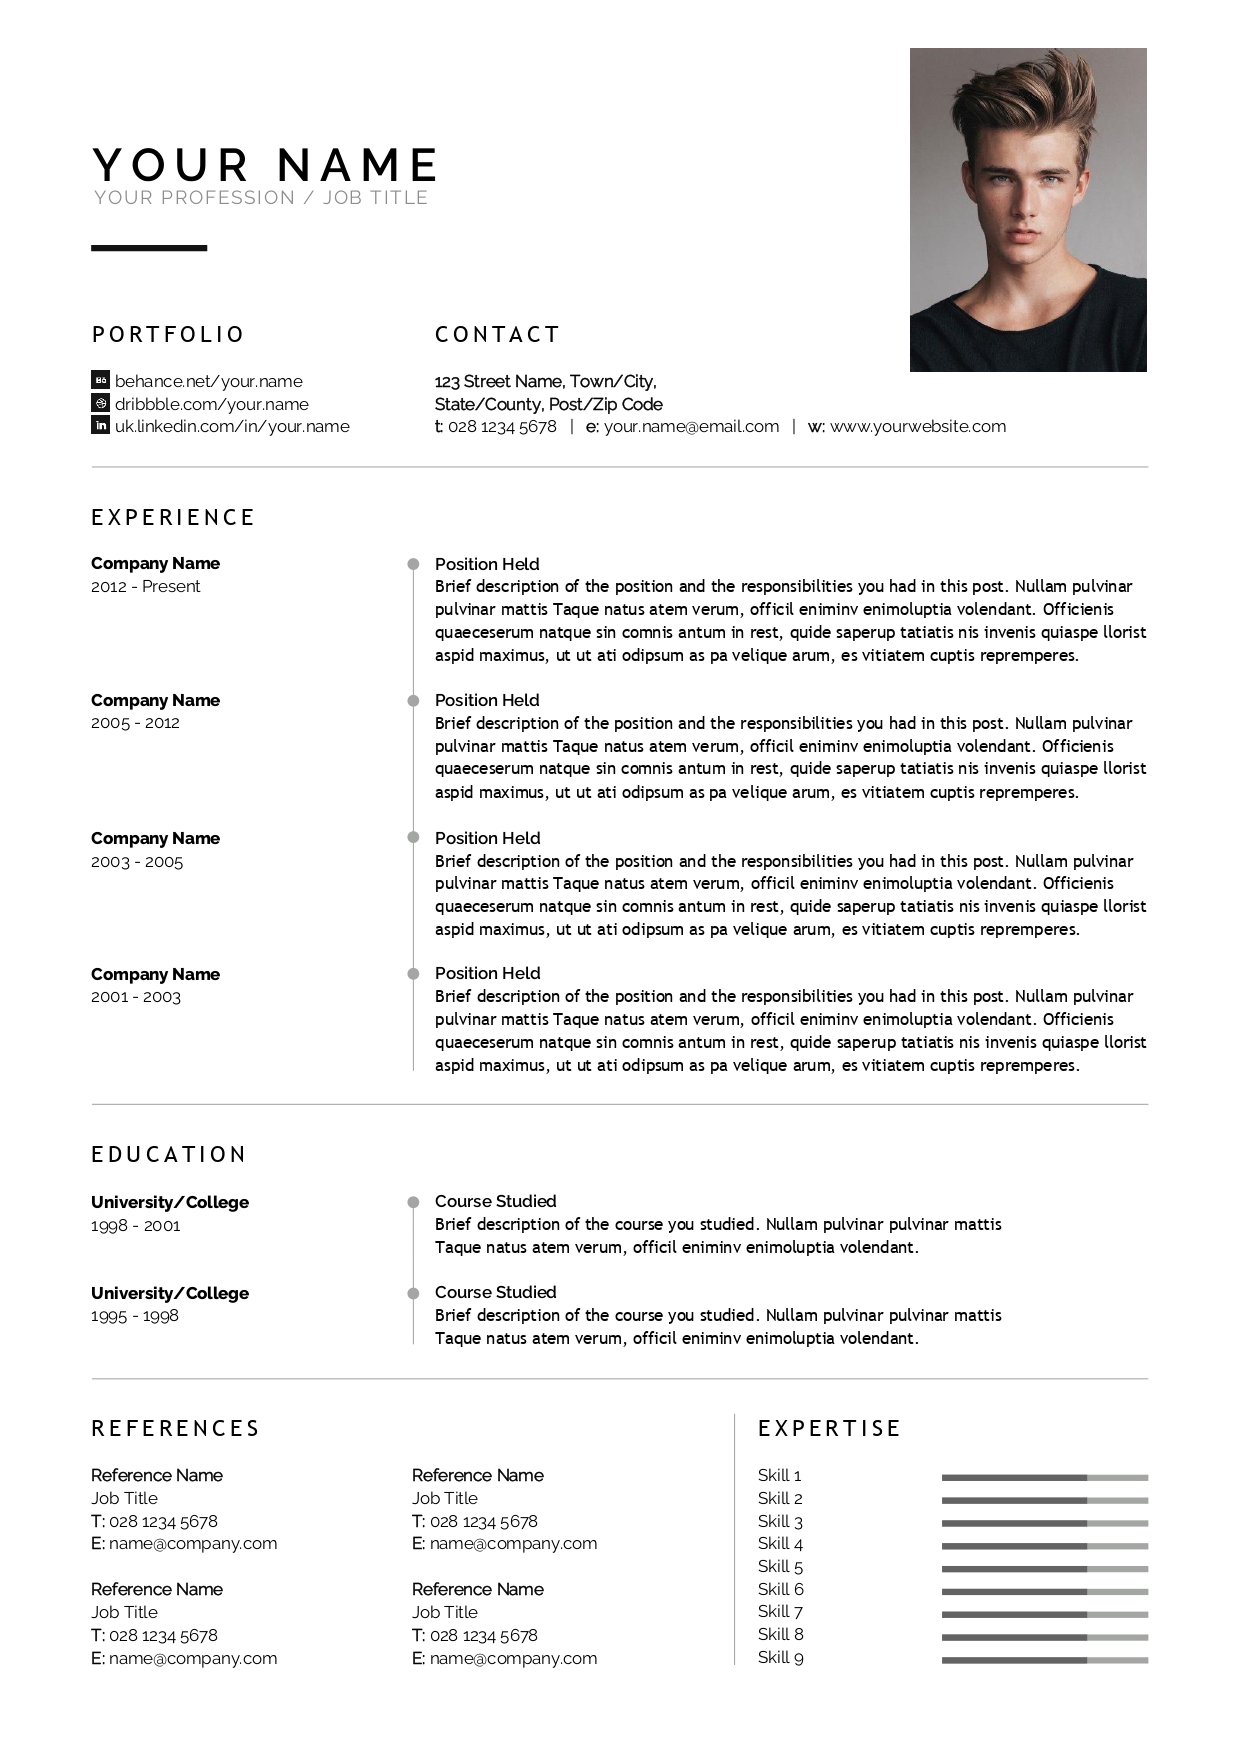 Resume/CV Template